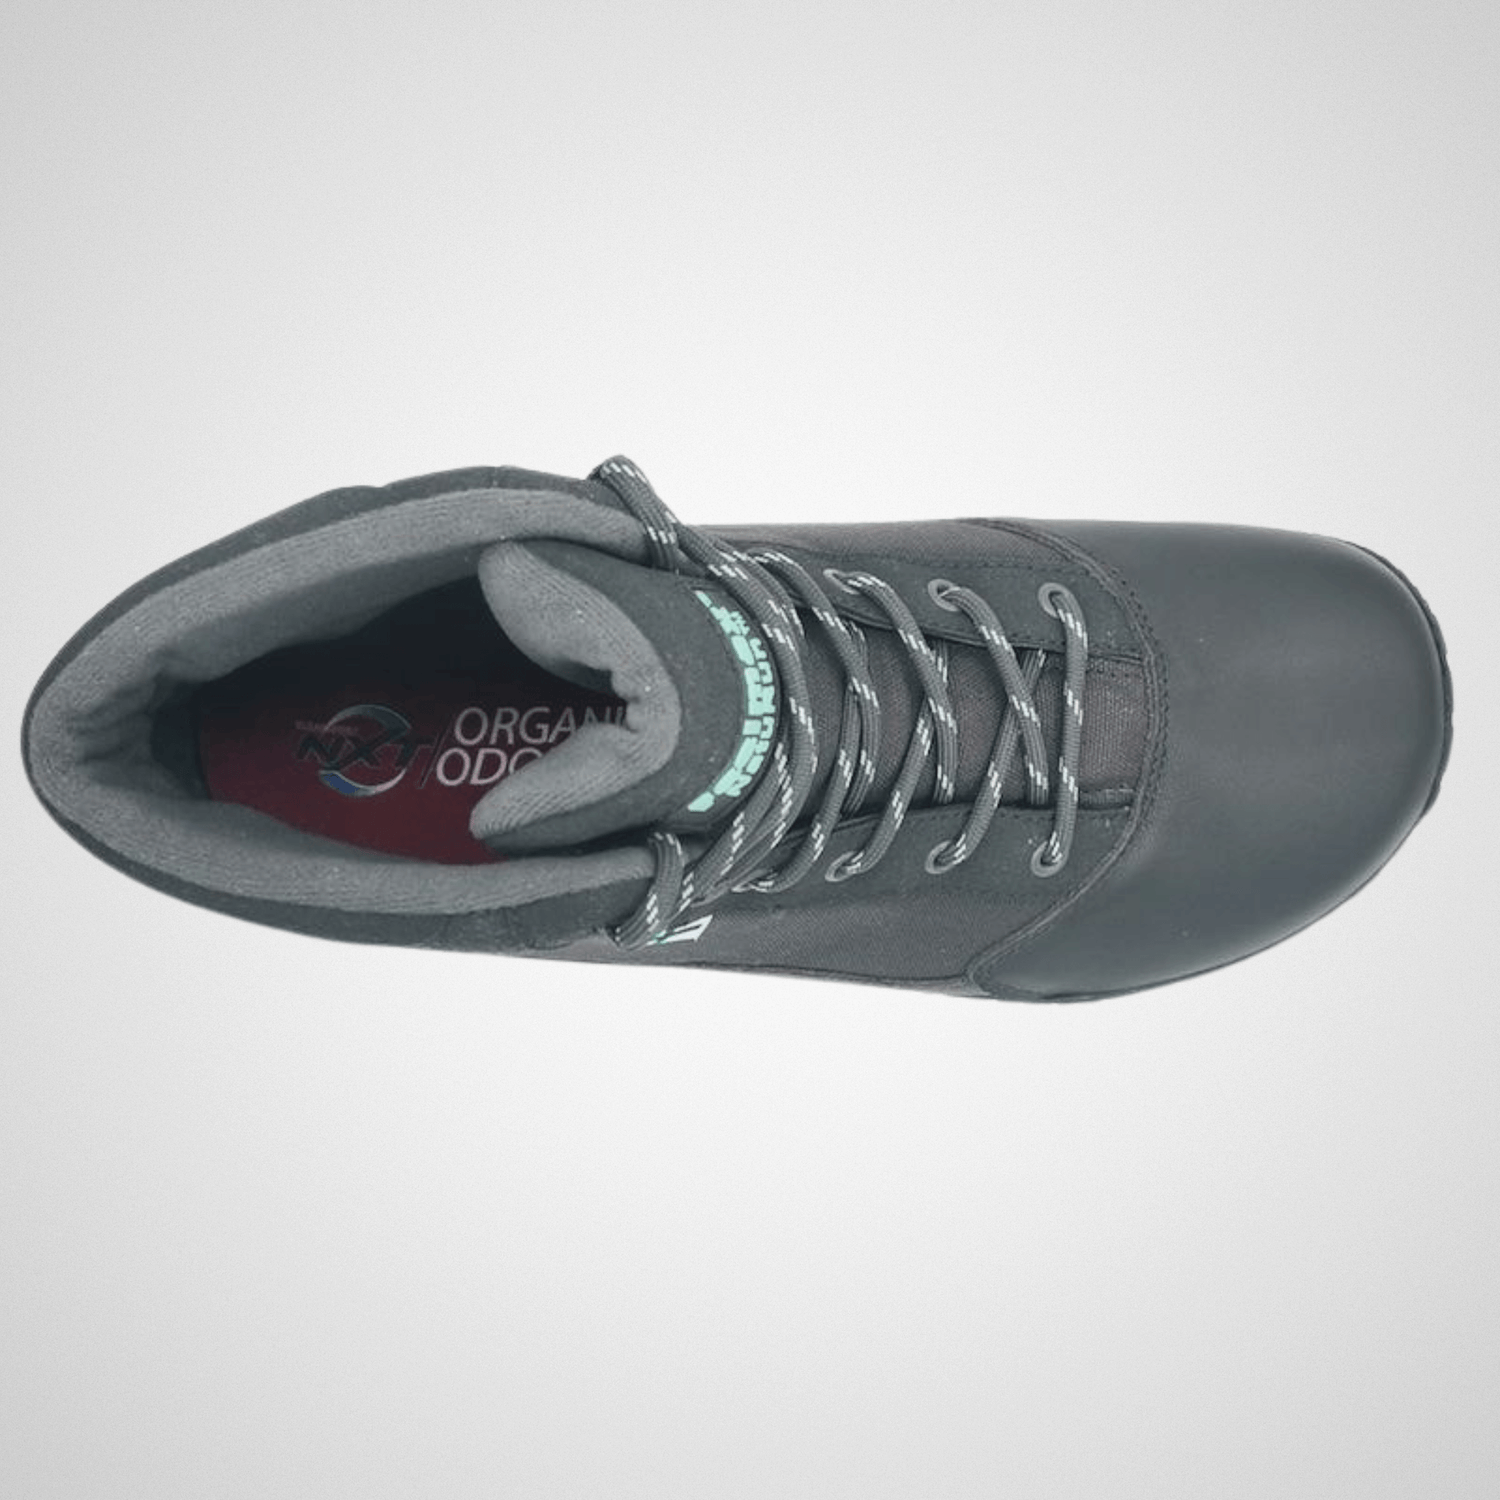 Feelmax - Kuuva Trek 2 barefoot shoes - Grey